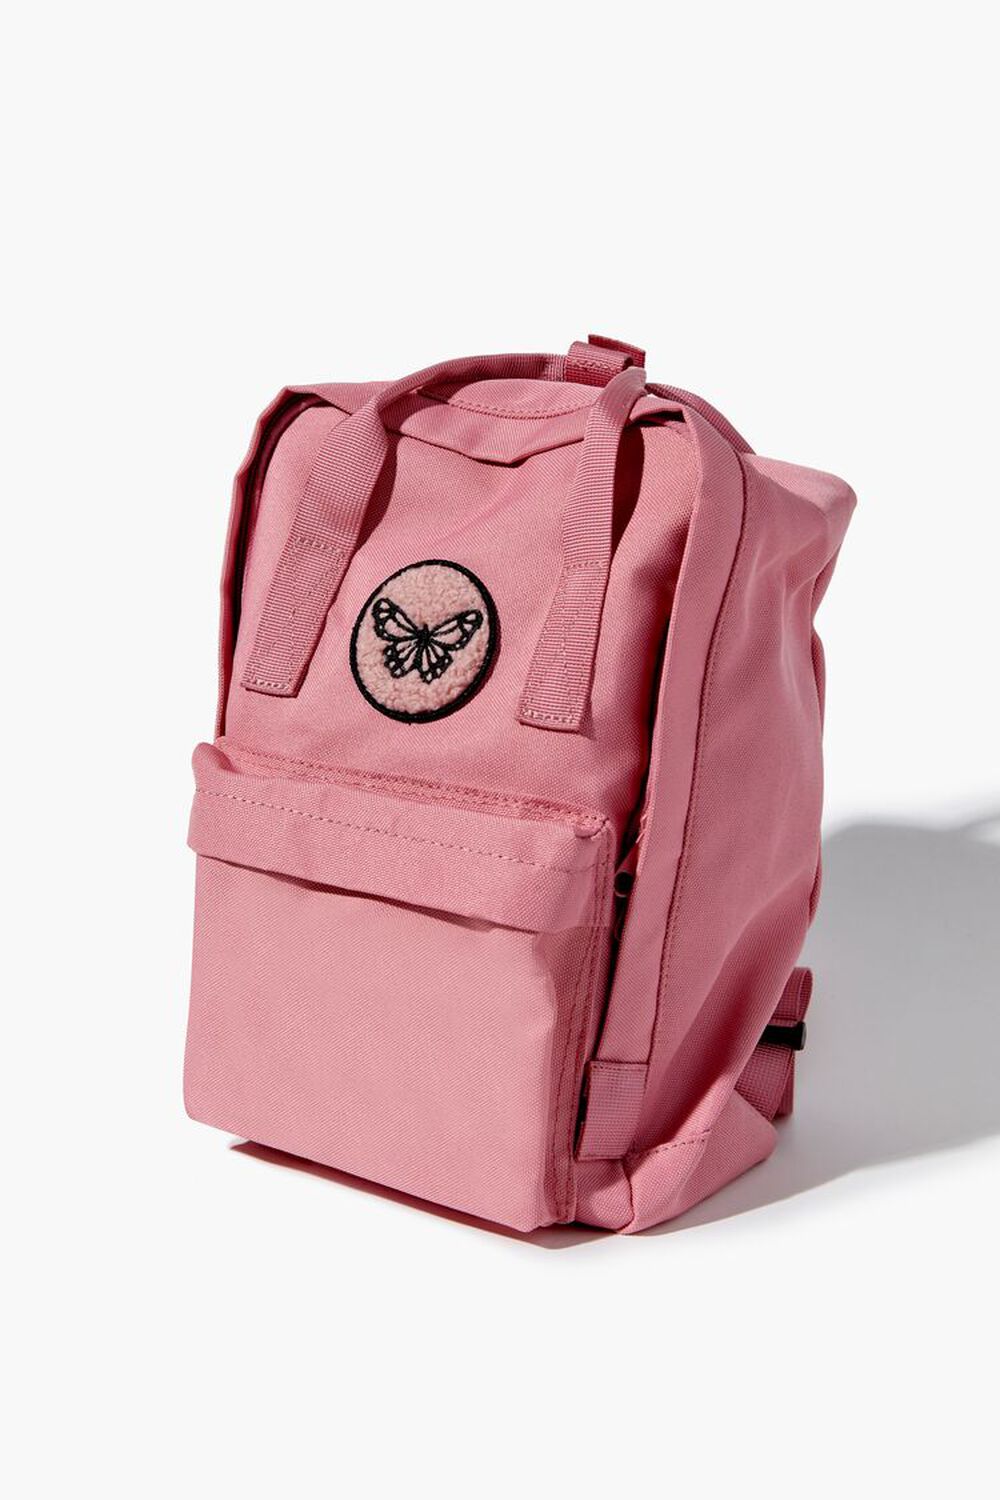 ROSE Kids Patch Backpack (Girls), image 1